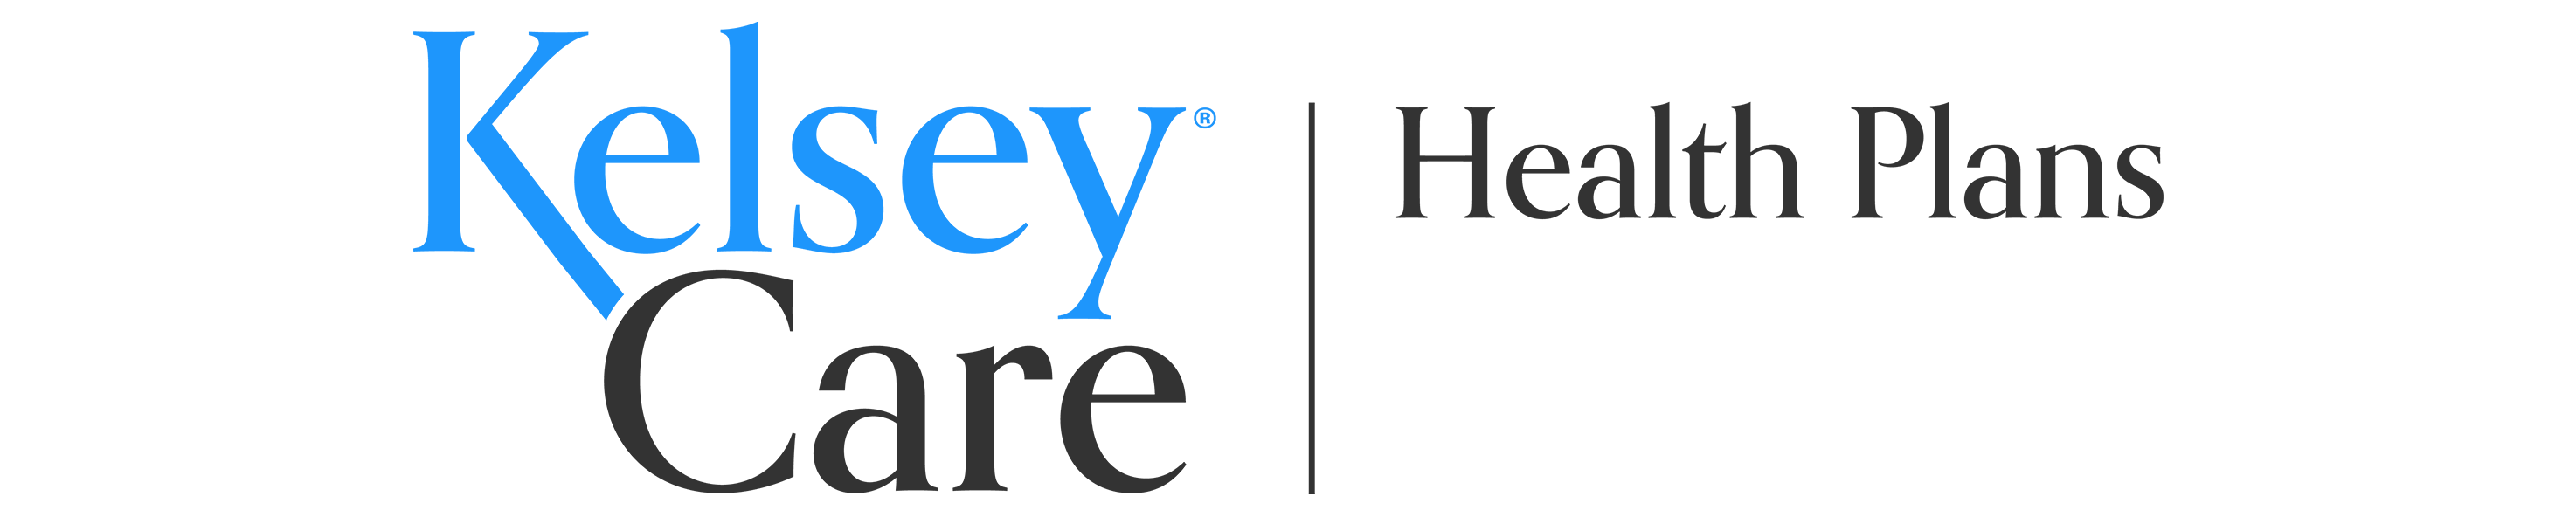 KelseyCare Health Plans logo